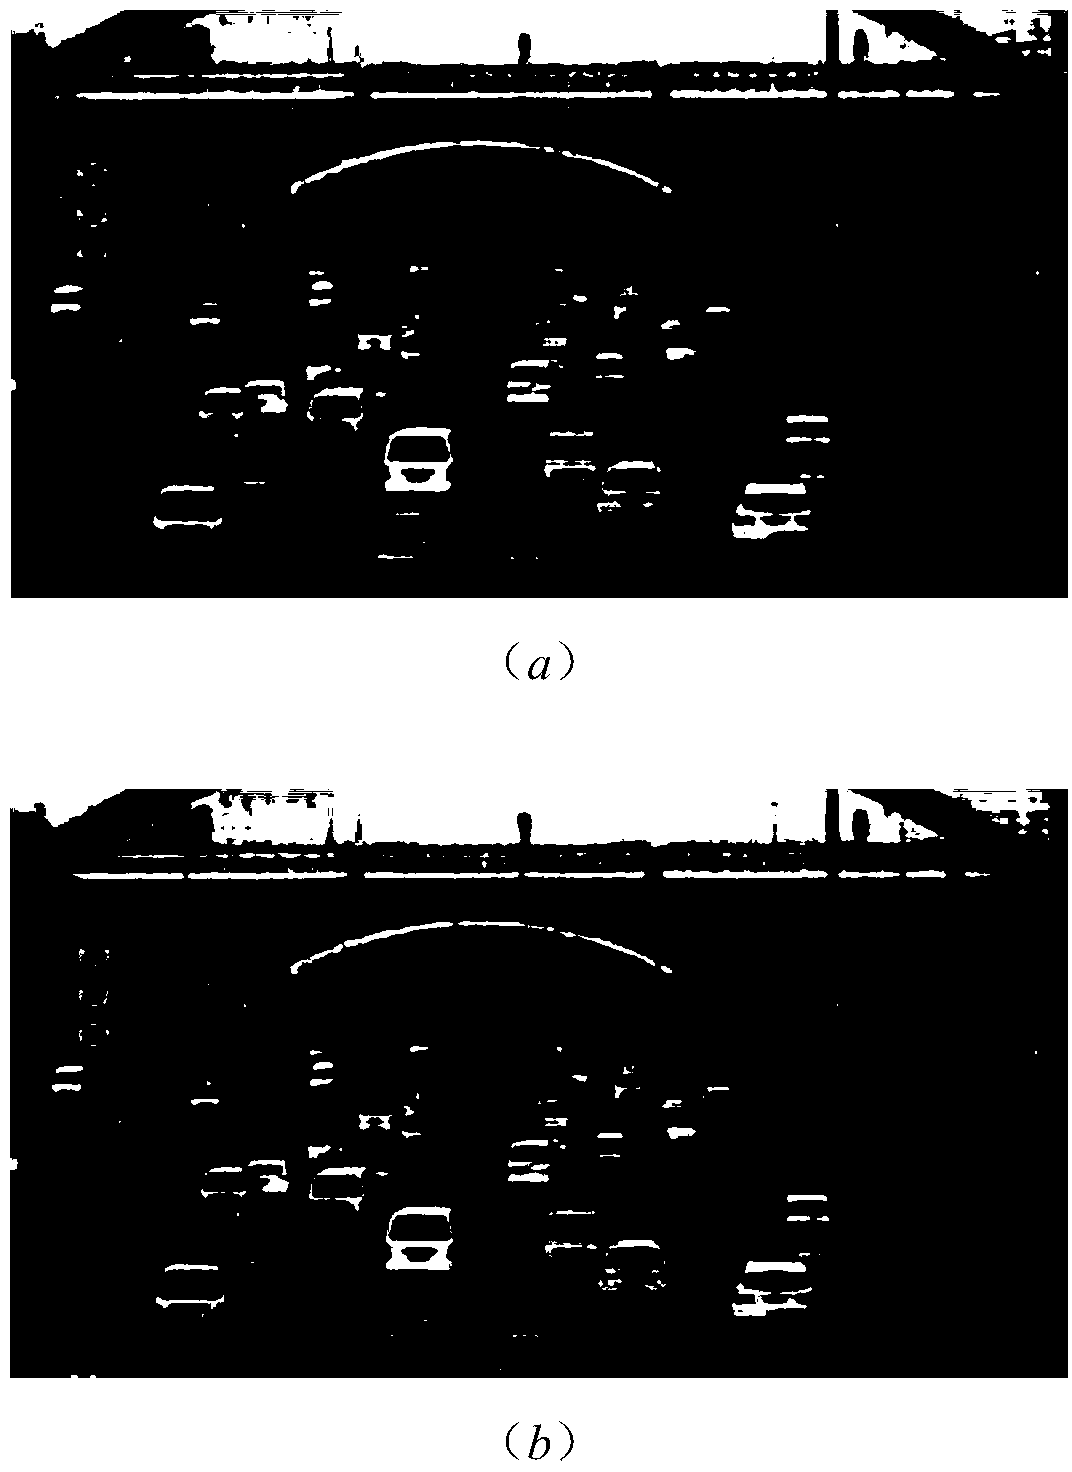 Traffic monitoring video real-time defogging method based on moving targets